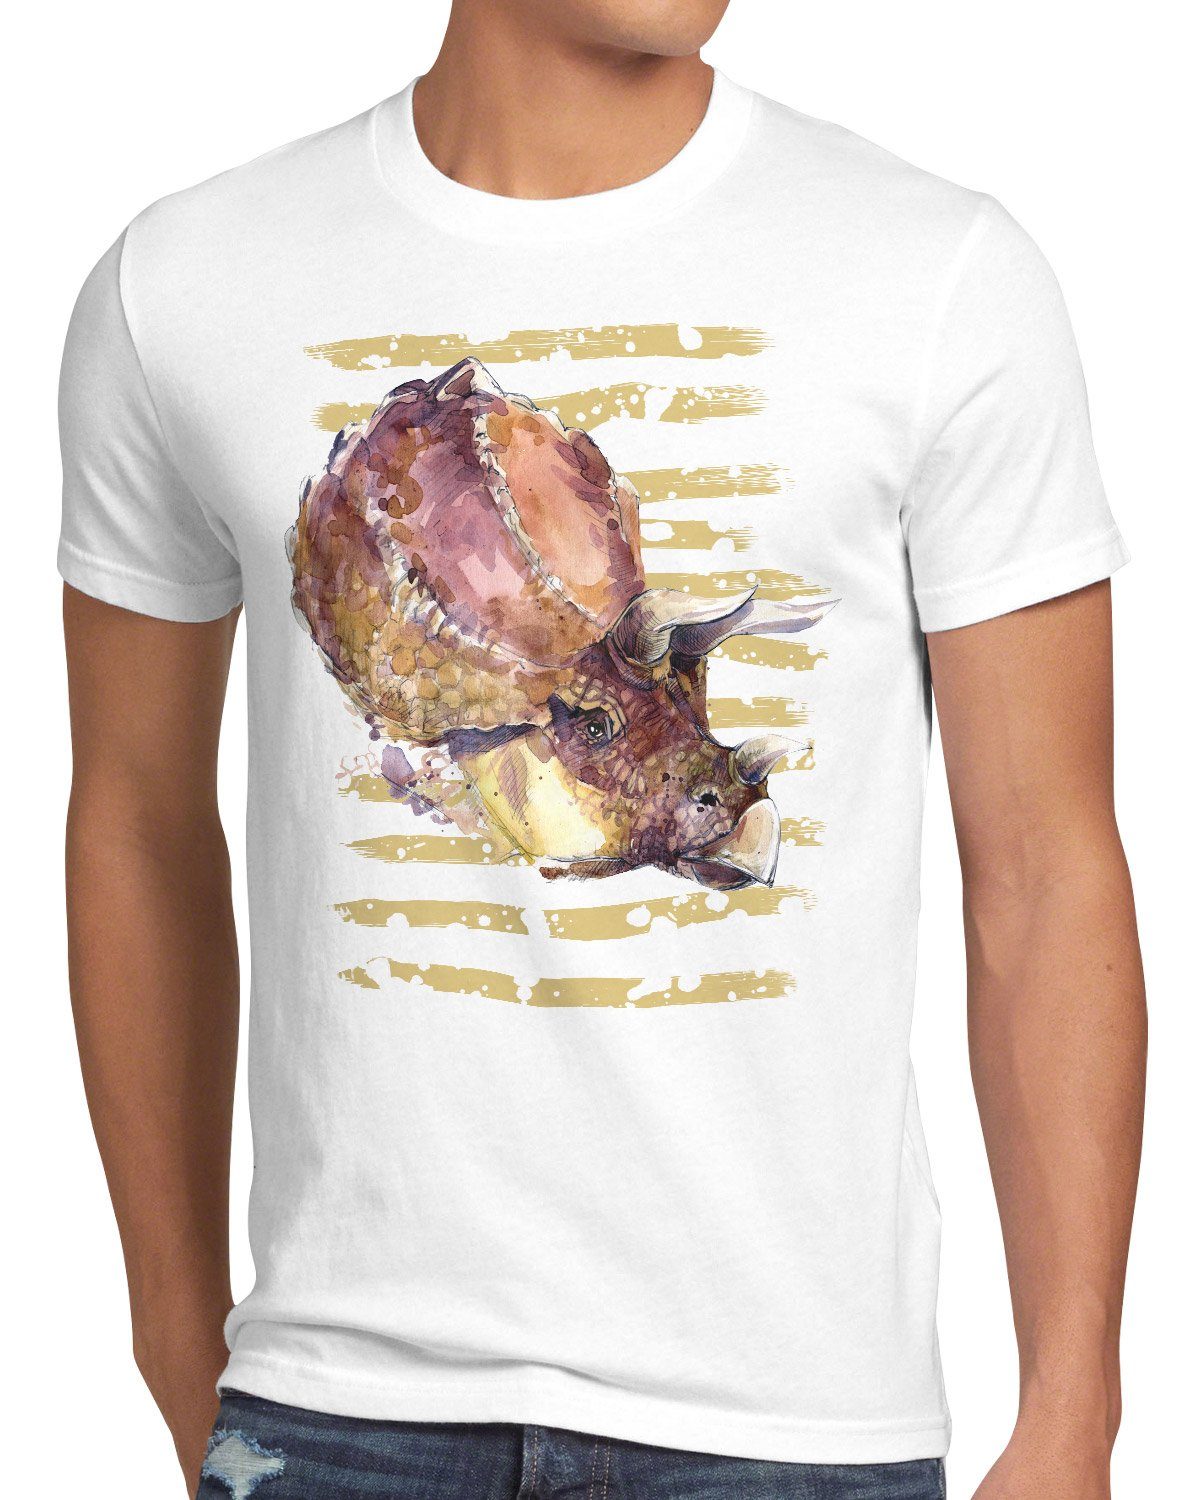 Print-Shirt T-Shirt dreihorn Herren style3 dinosaurier Triceratops